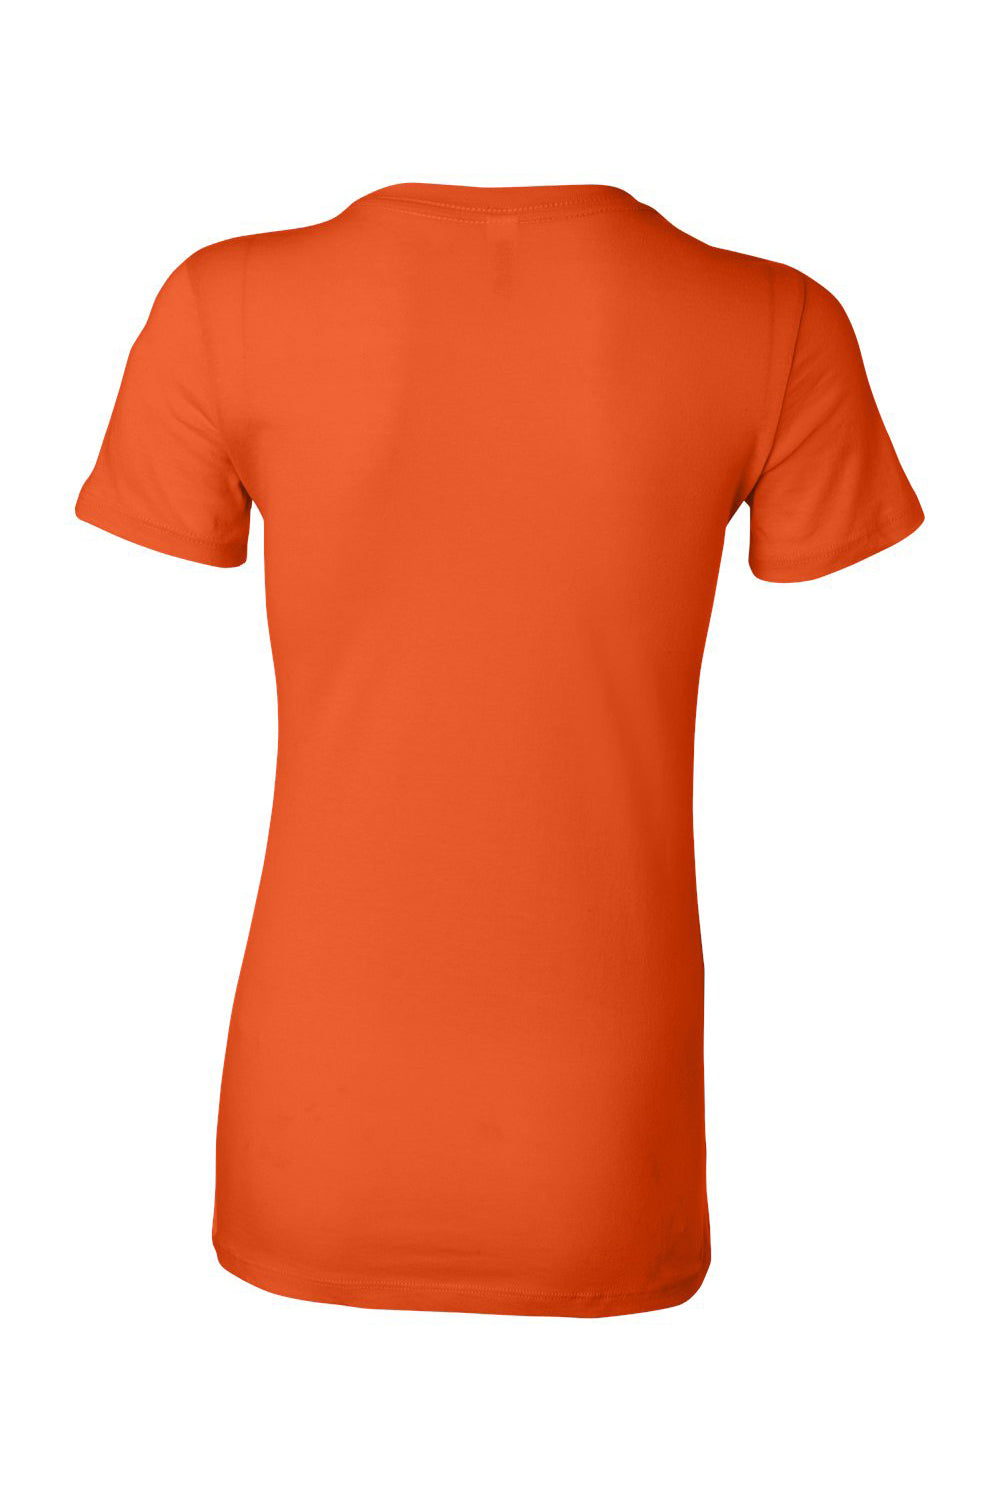 Bella + Canvas BC6004/6004 Womens The Favorite Short Sleeve Crewneck T-Shirt Orange Flat Back